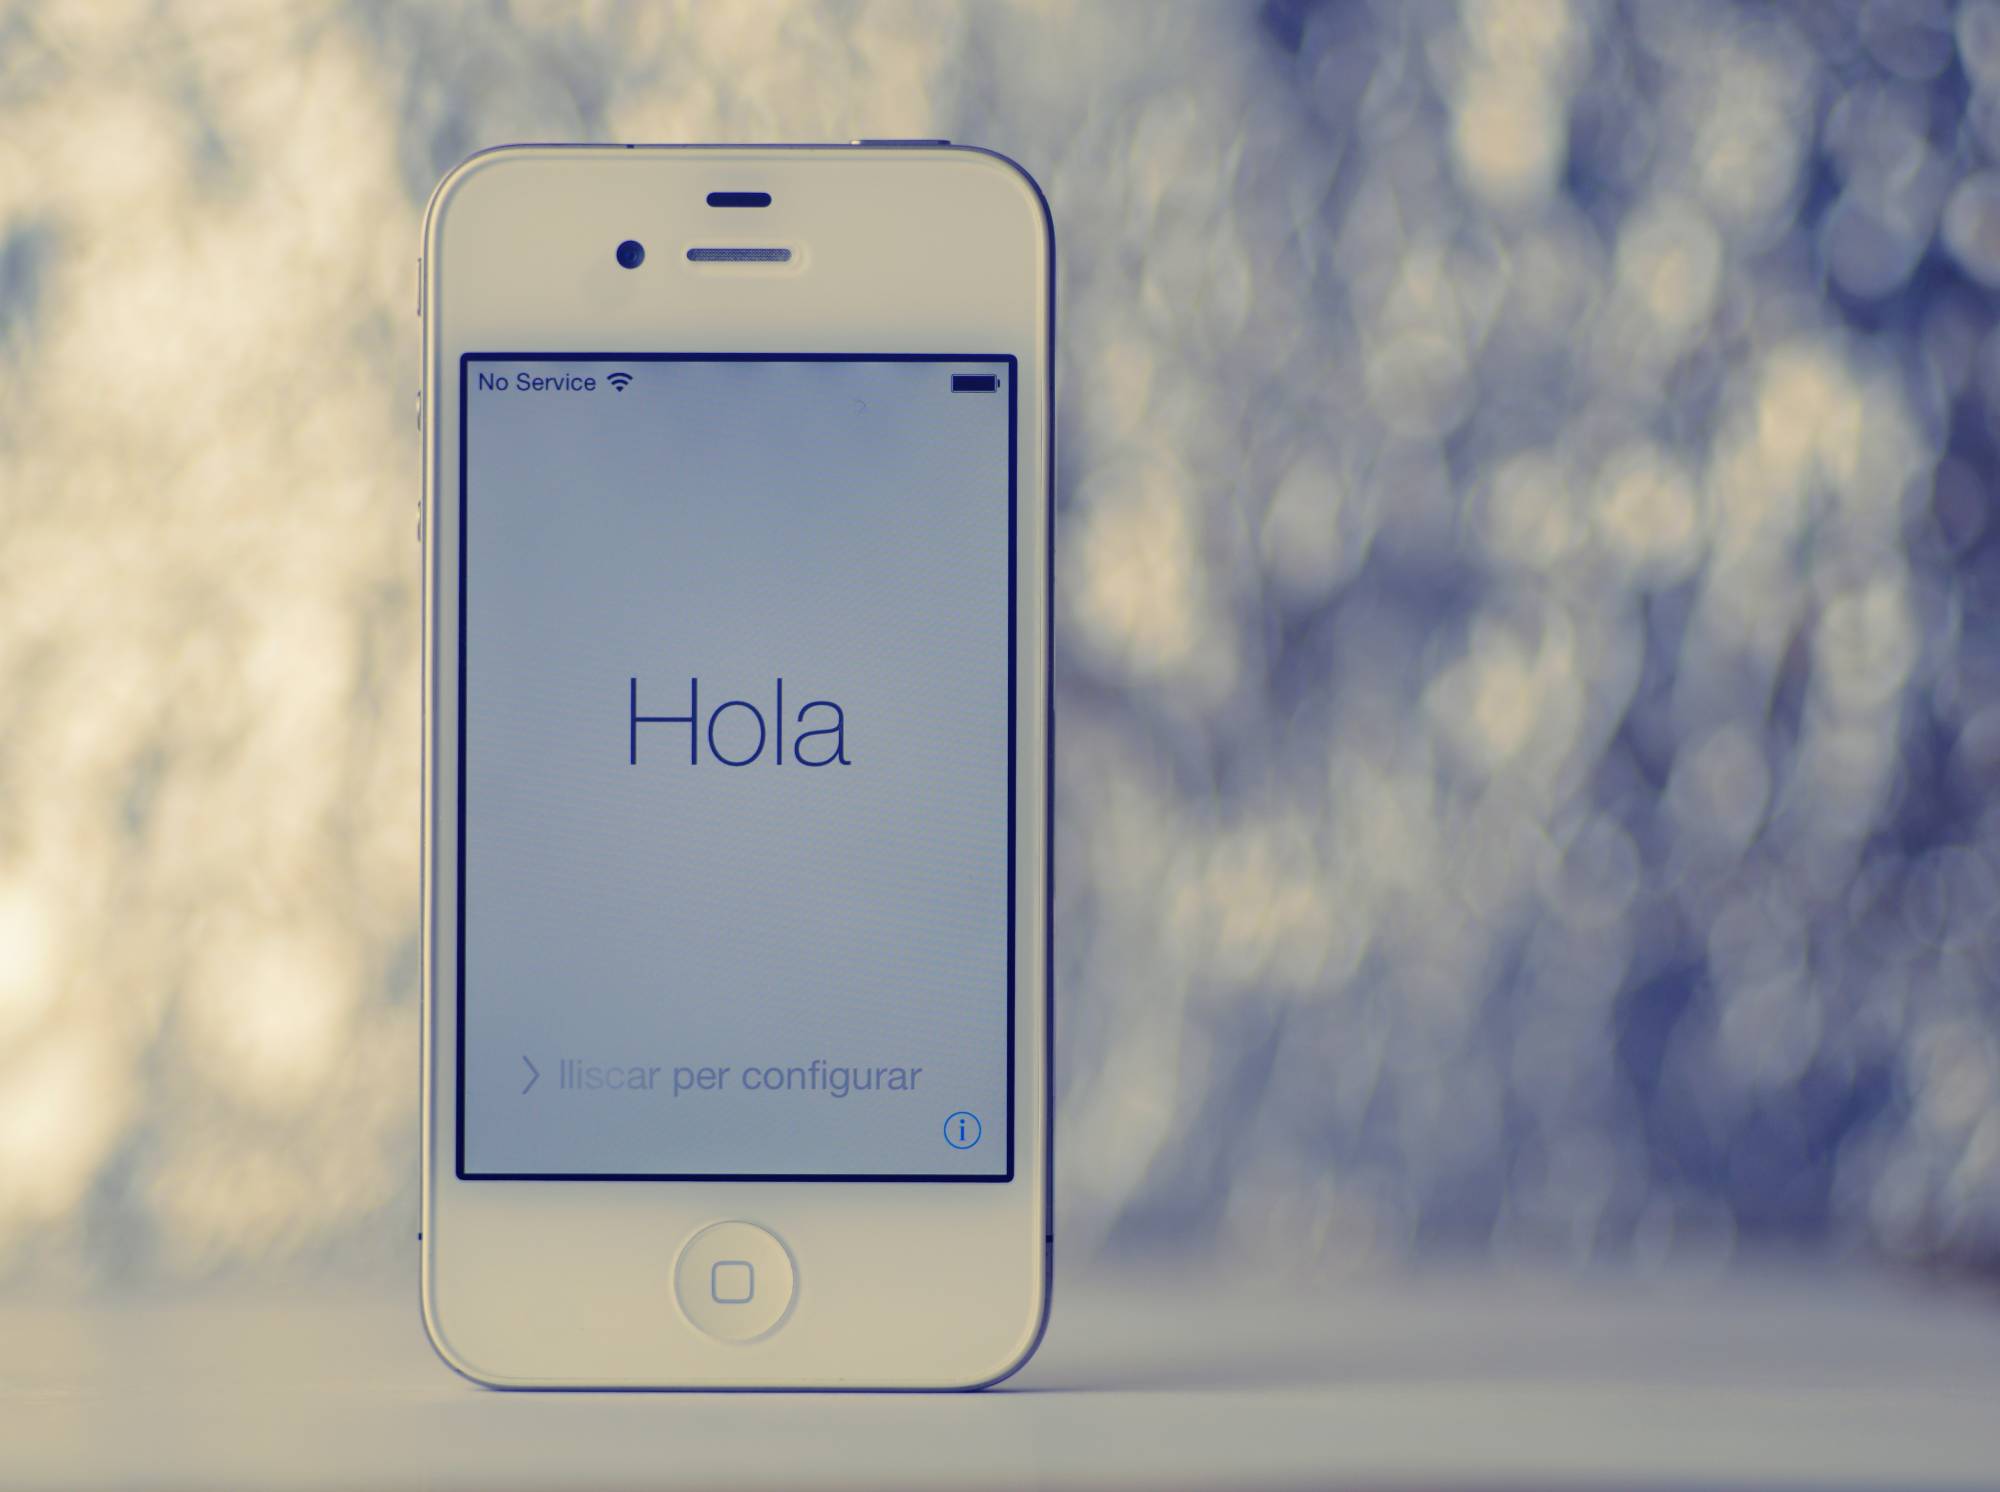 iphone on startup screen suggesting spanish language setting